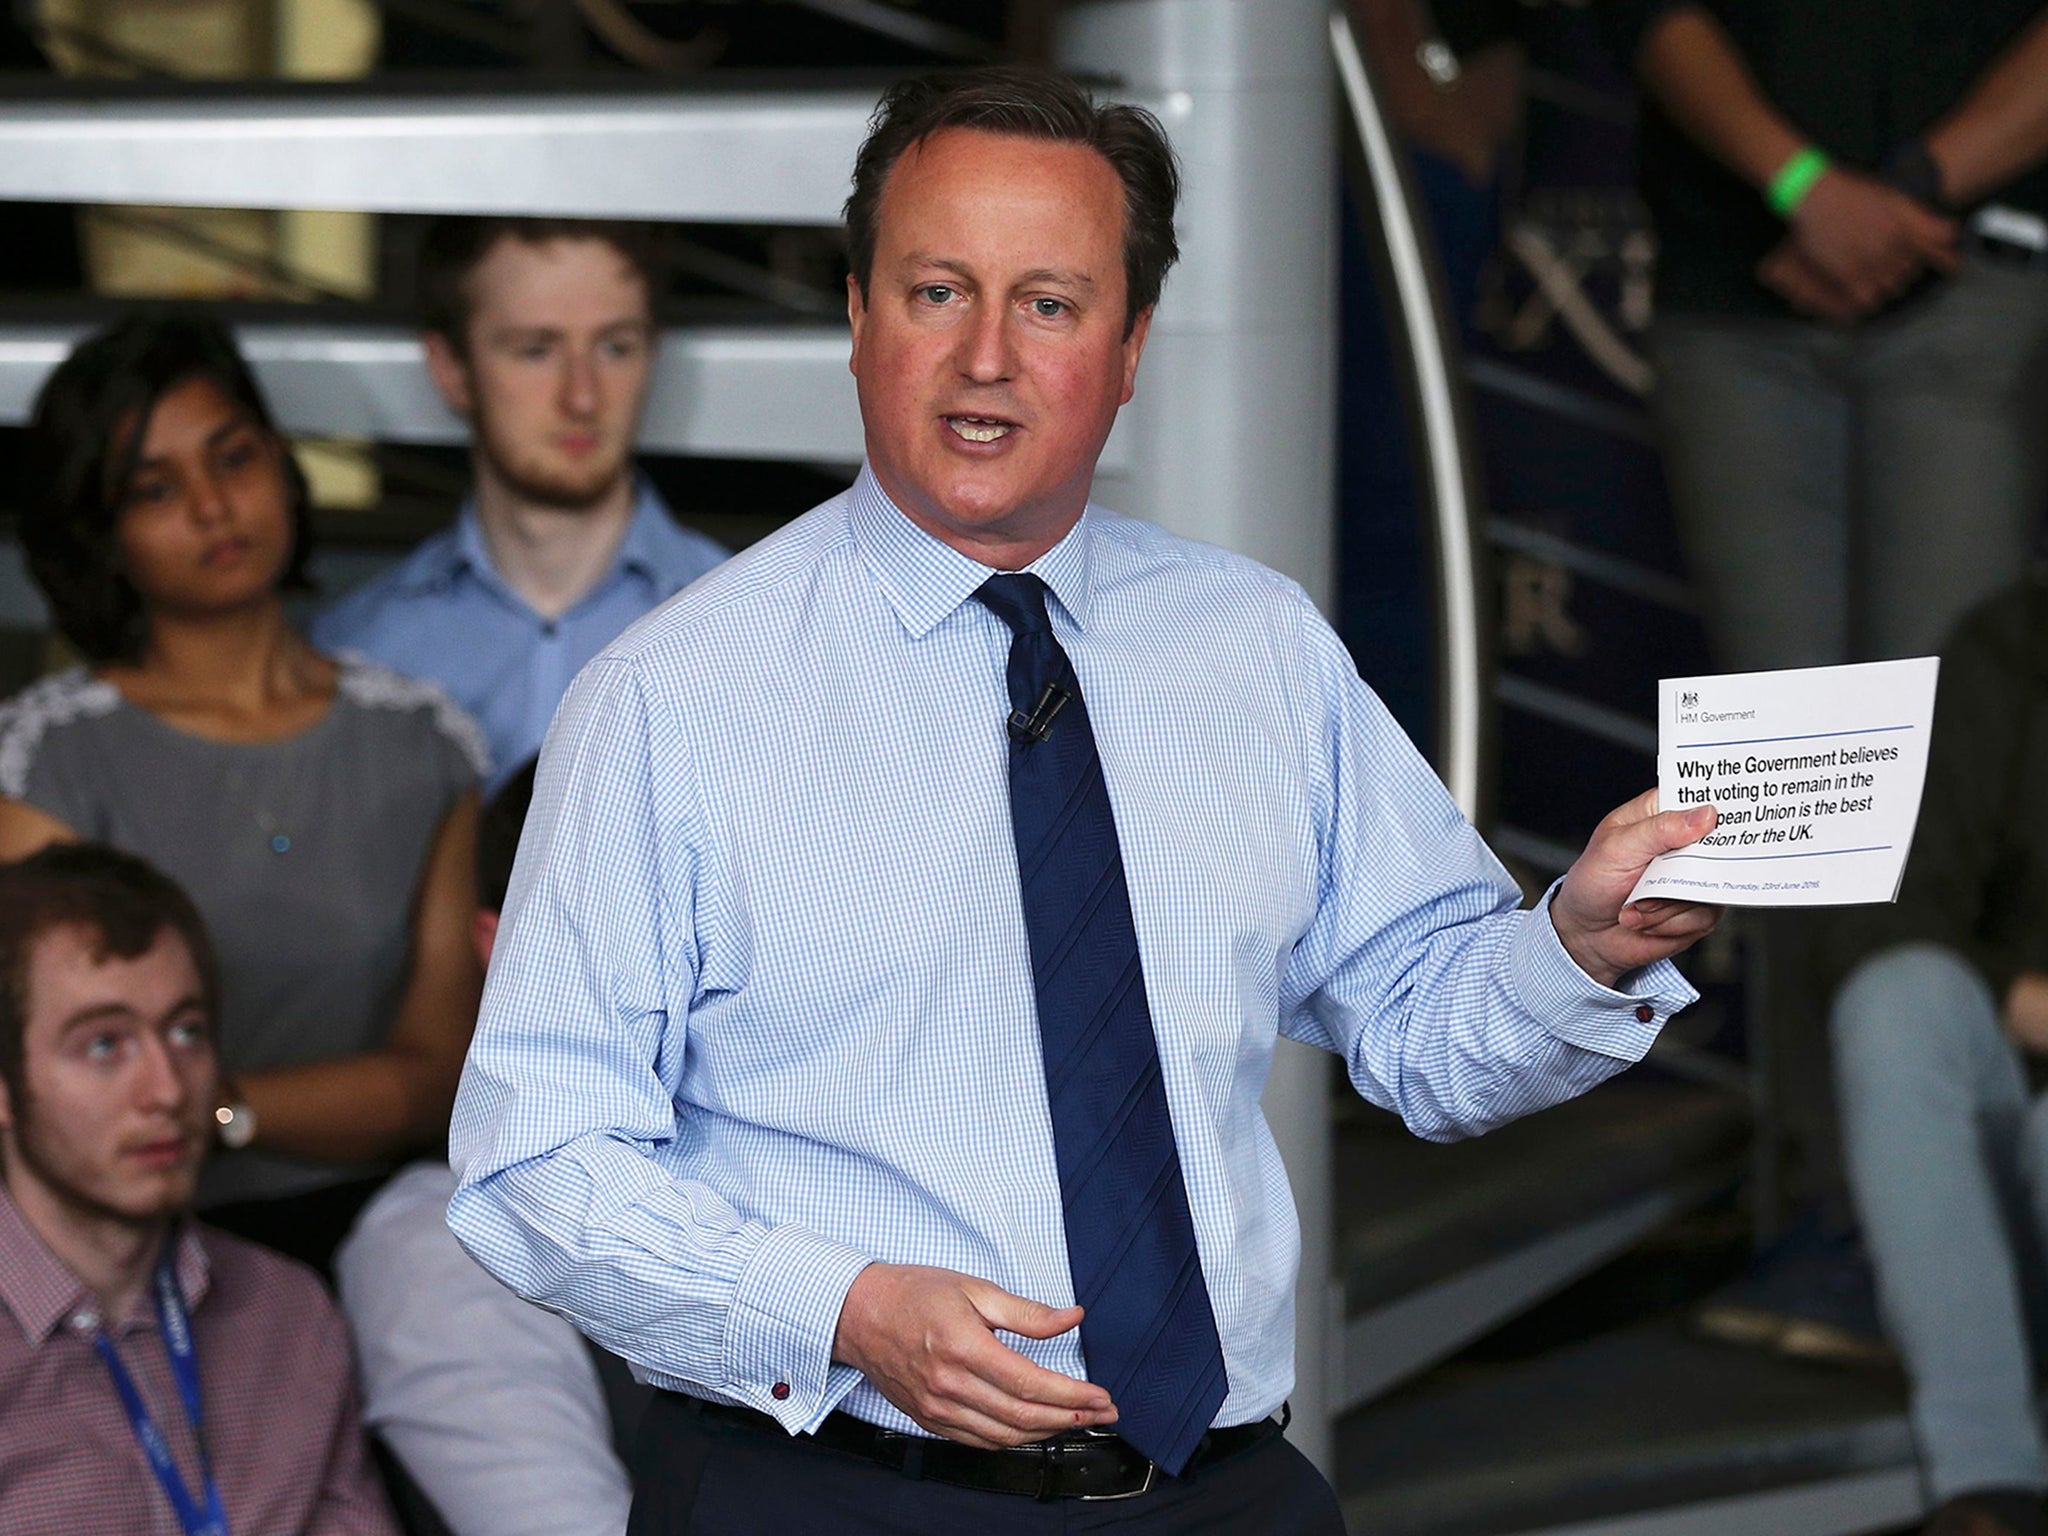 David Cameron addresses students at Exeter University